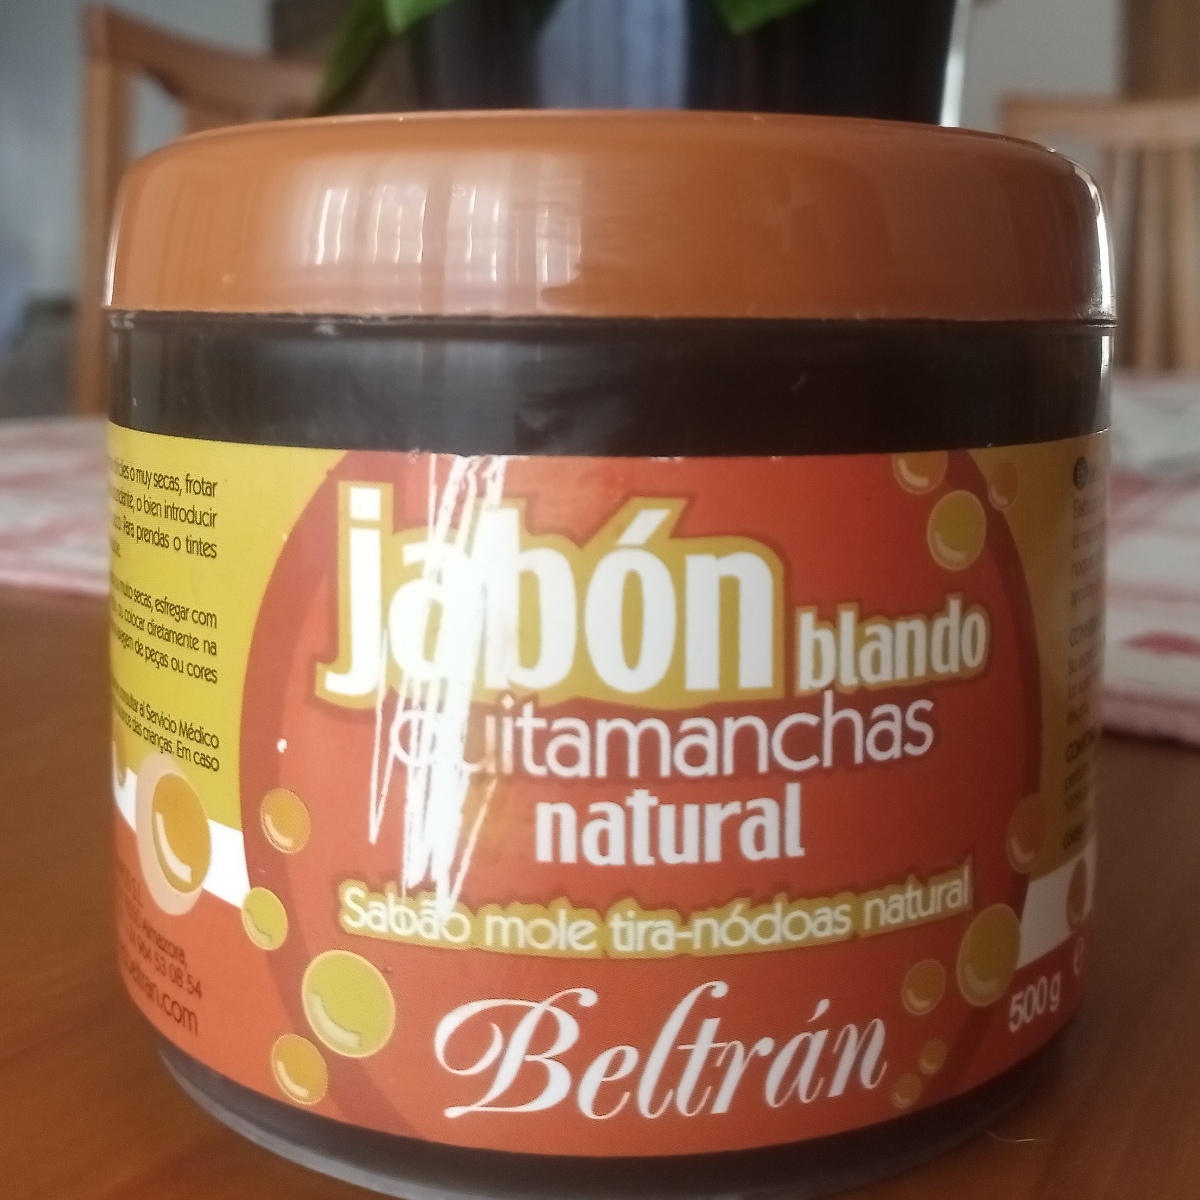 Beltran Jabón blando quitamanchas Reviews